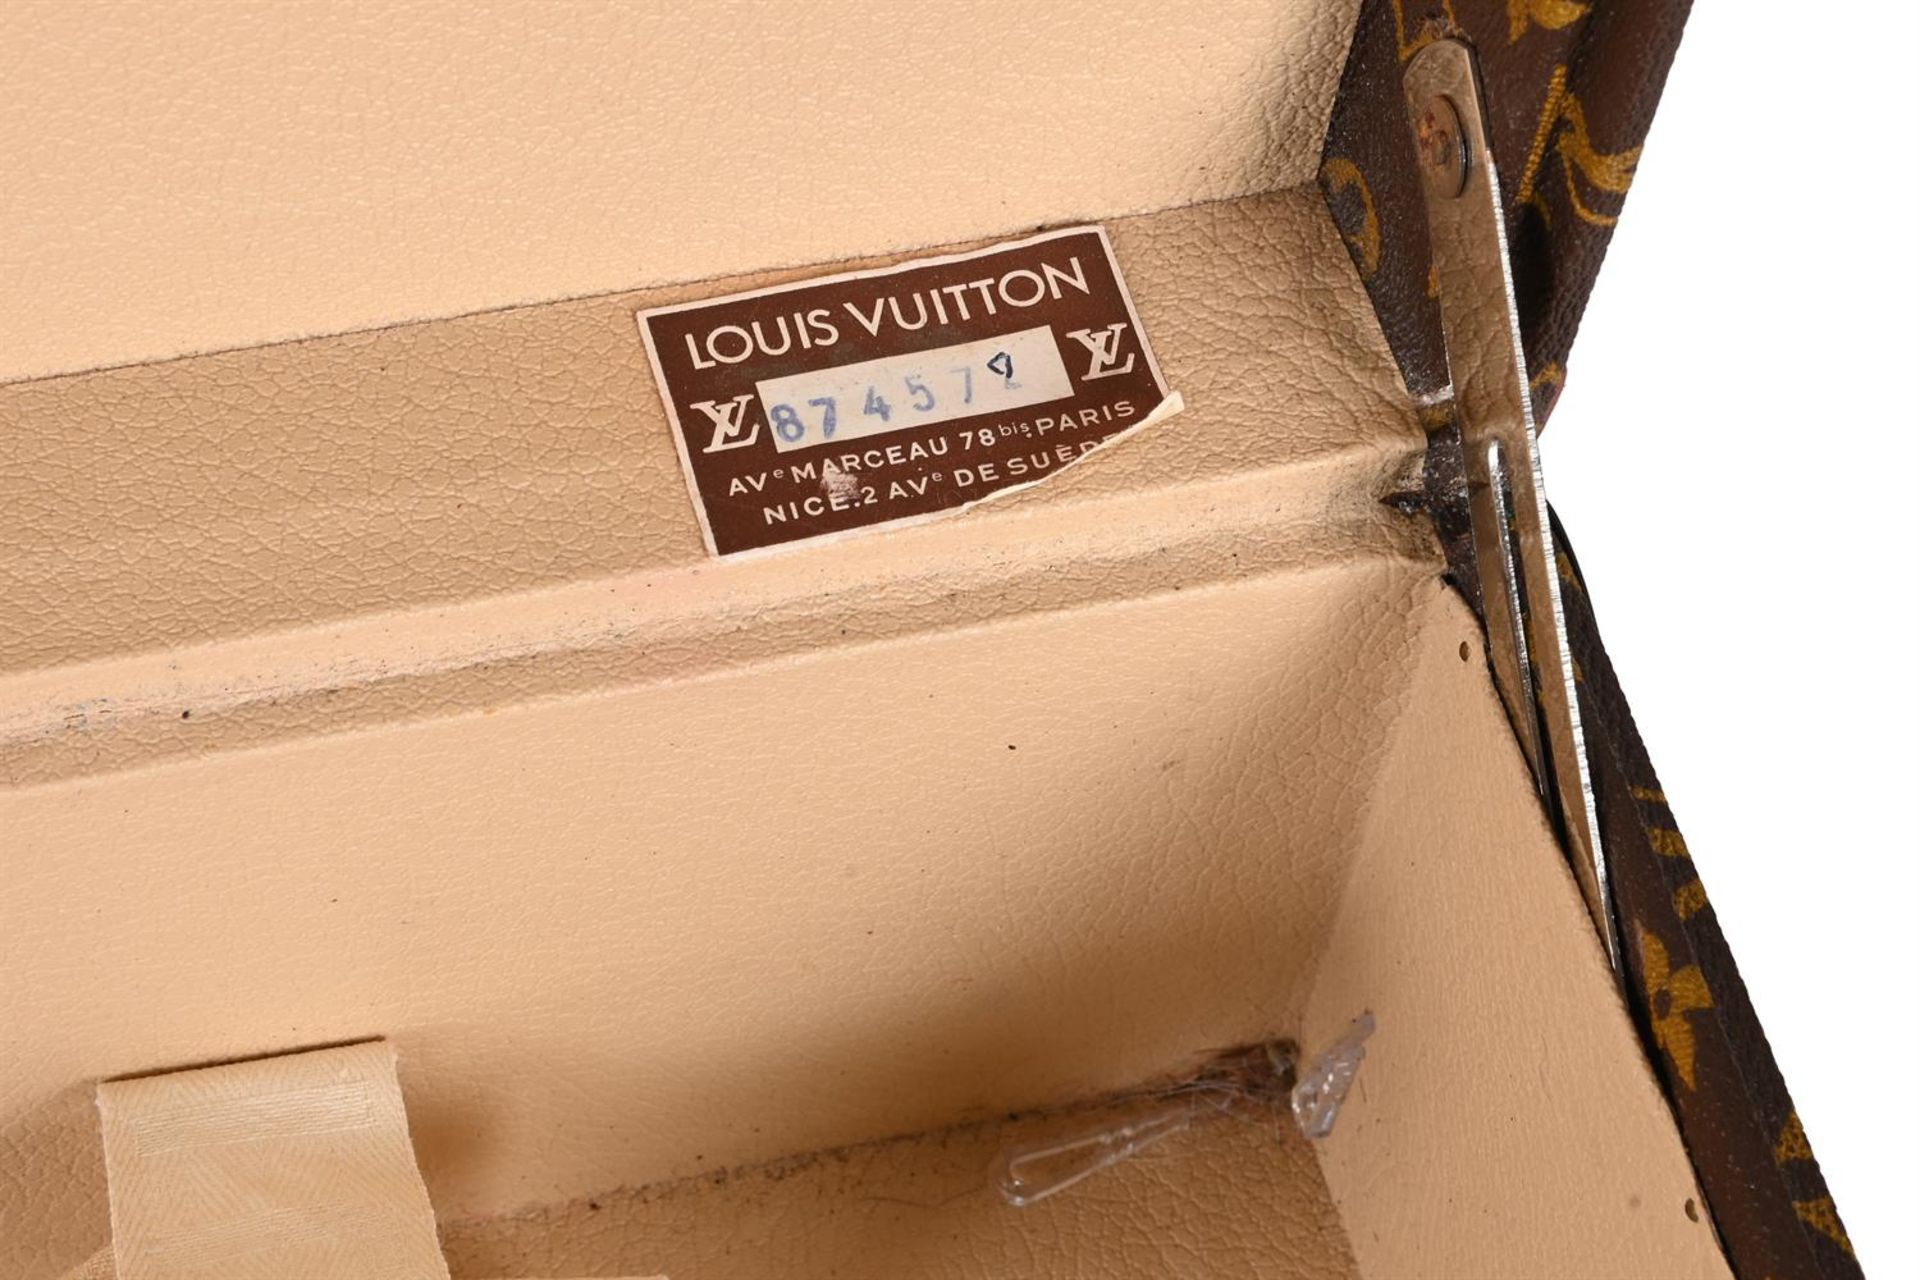 LOUIS VUITTON, A MONOGRAMMED COATED CANVAS HARD SUITCASE - Bild 3 aus 3